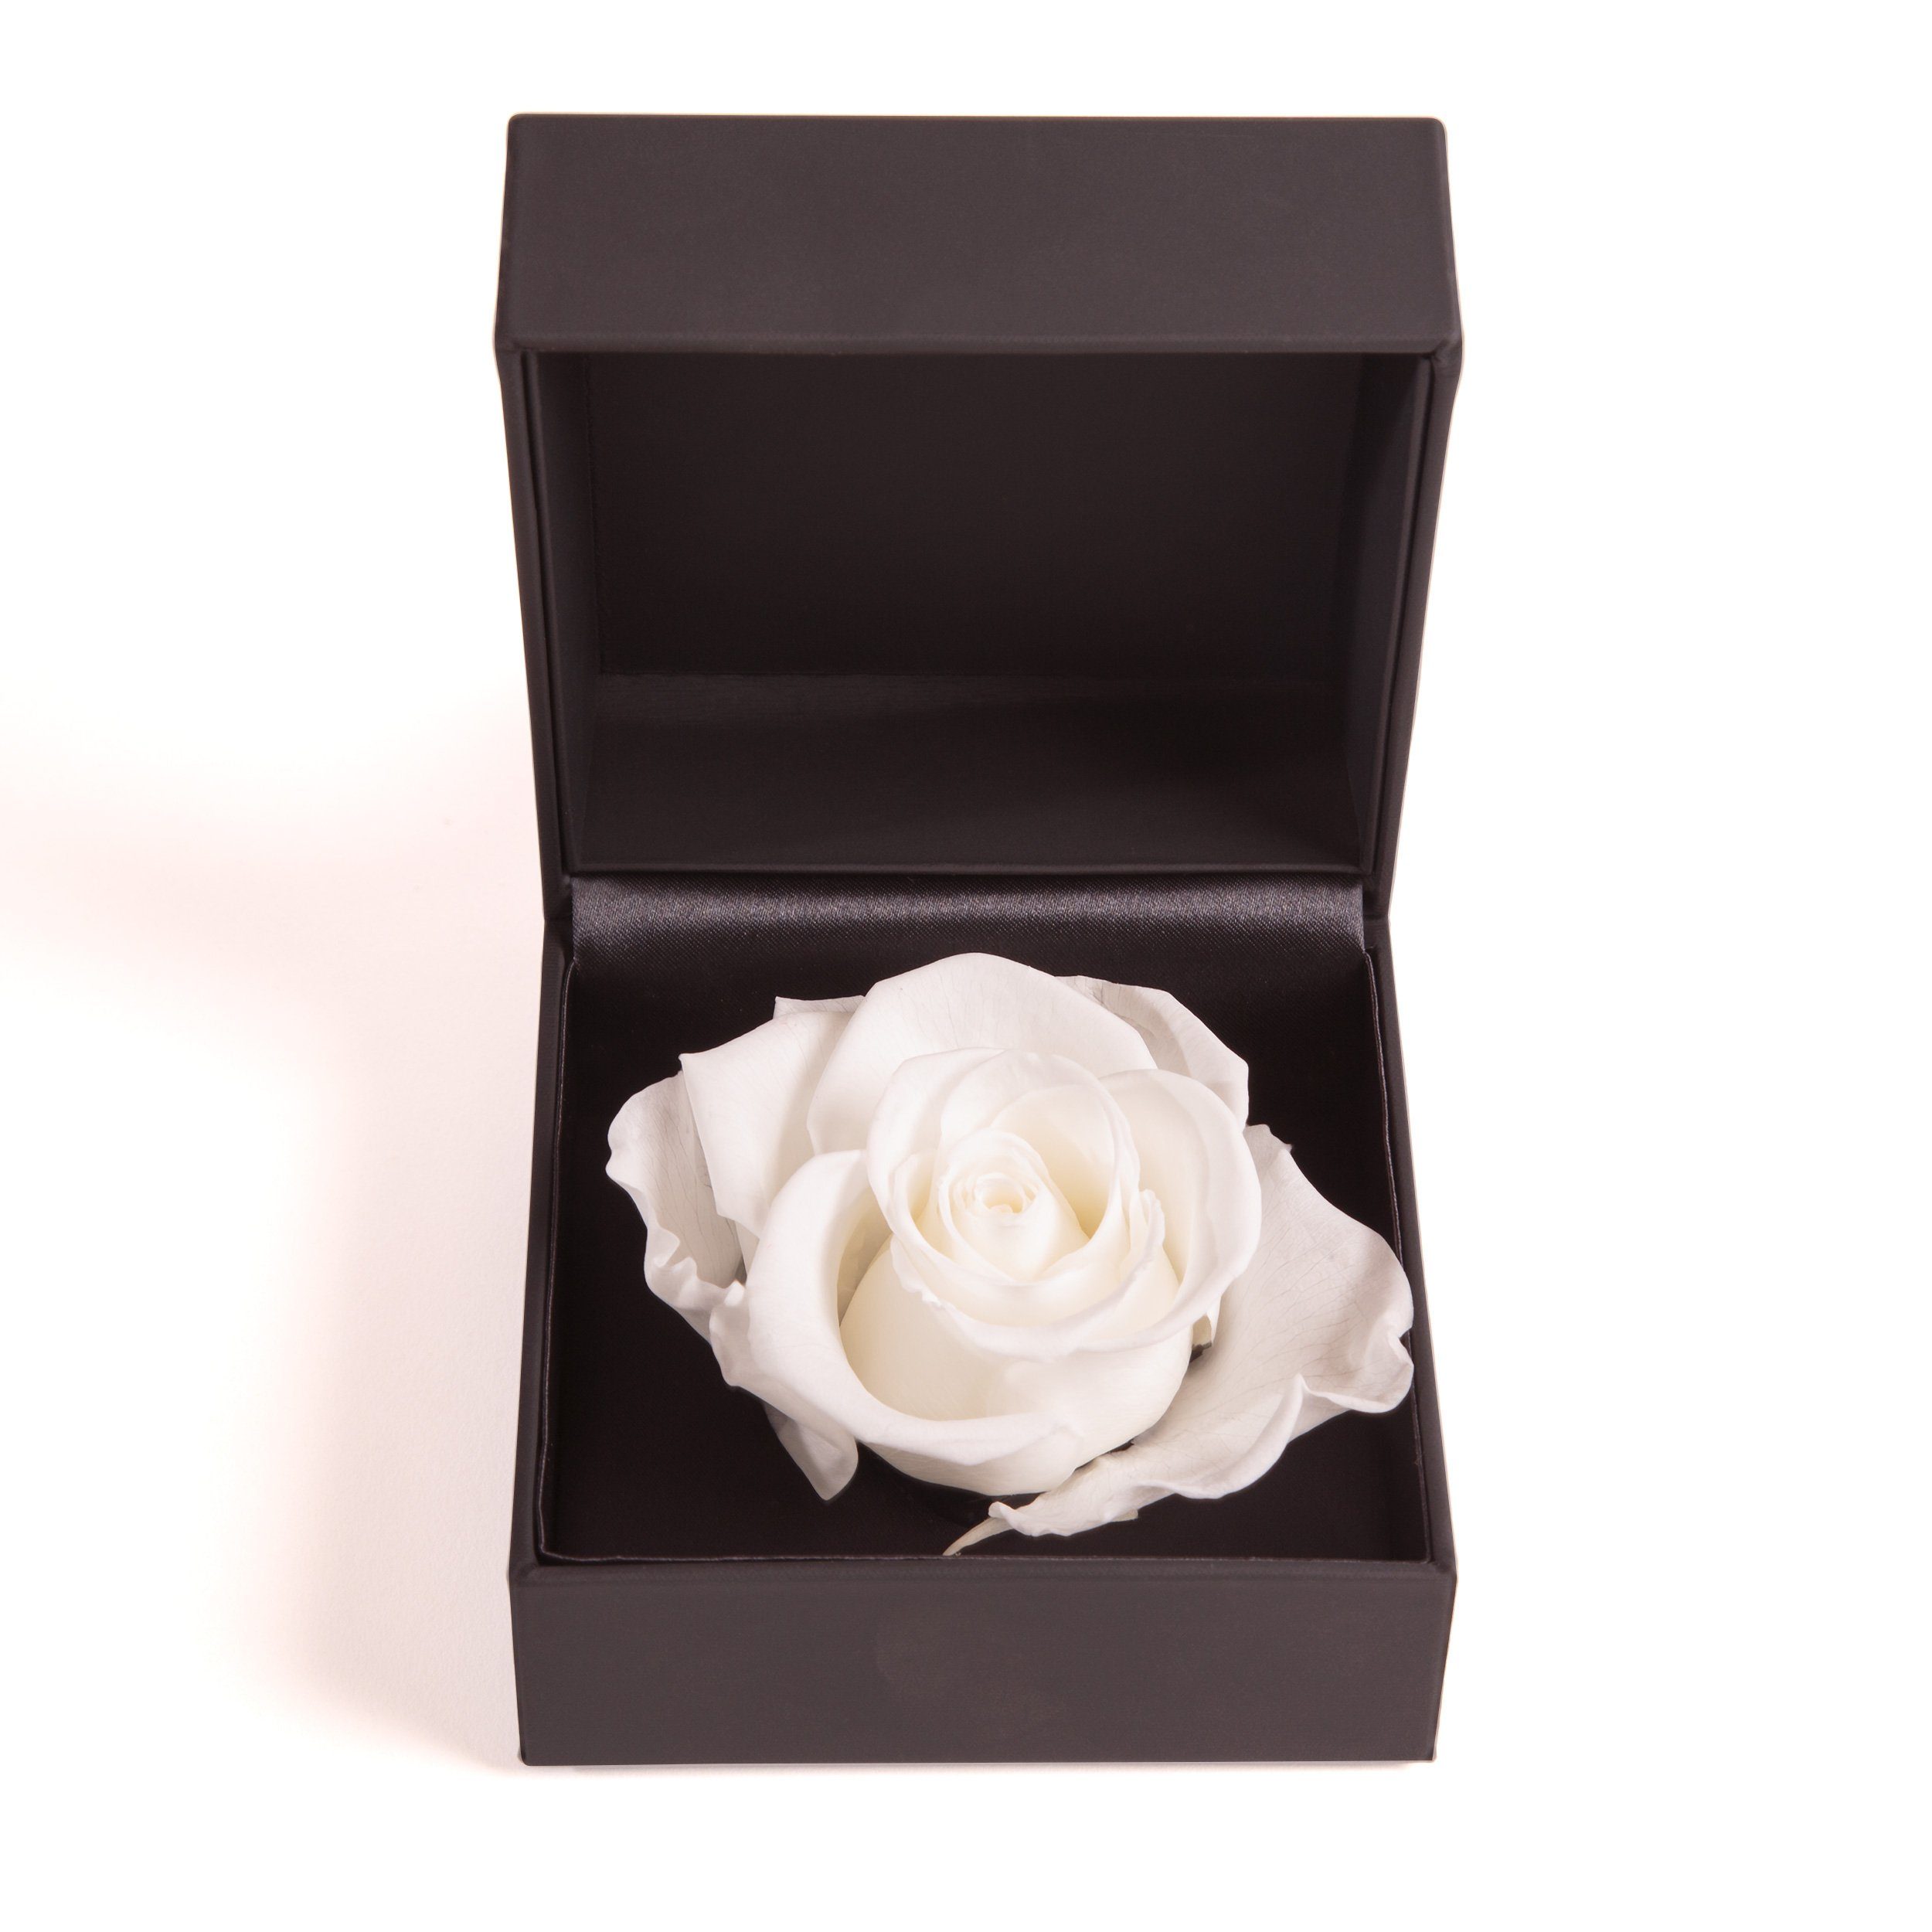 Kunstblume Rosenbox Ringbox Groß Höhe Rose in Box Langlebige cm, Weiß SCHULZ Infinity Ringdose Heidelberg, 9 konserviert Rose ROSEMARIE Rose